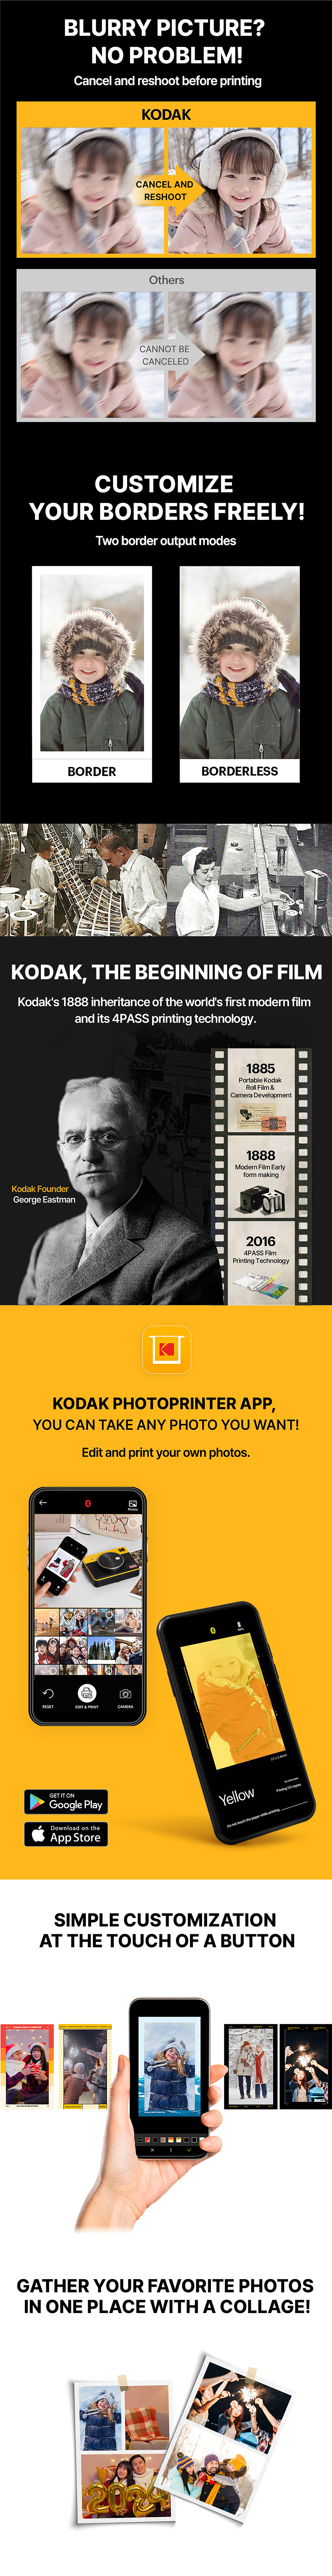 Kodak Mini Retro 2 P210 - Mini Impresora Conectada ( 5,3 X 8,6 Cm ,  Bluetooth) con Ofertas en Carrefour